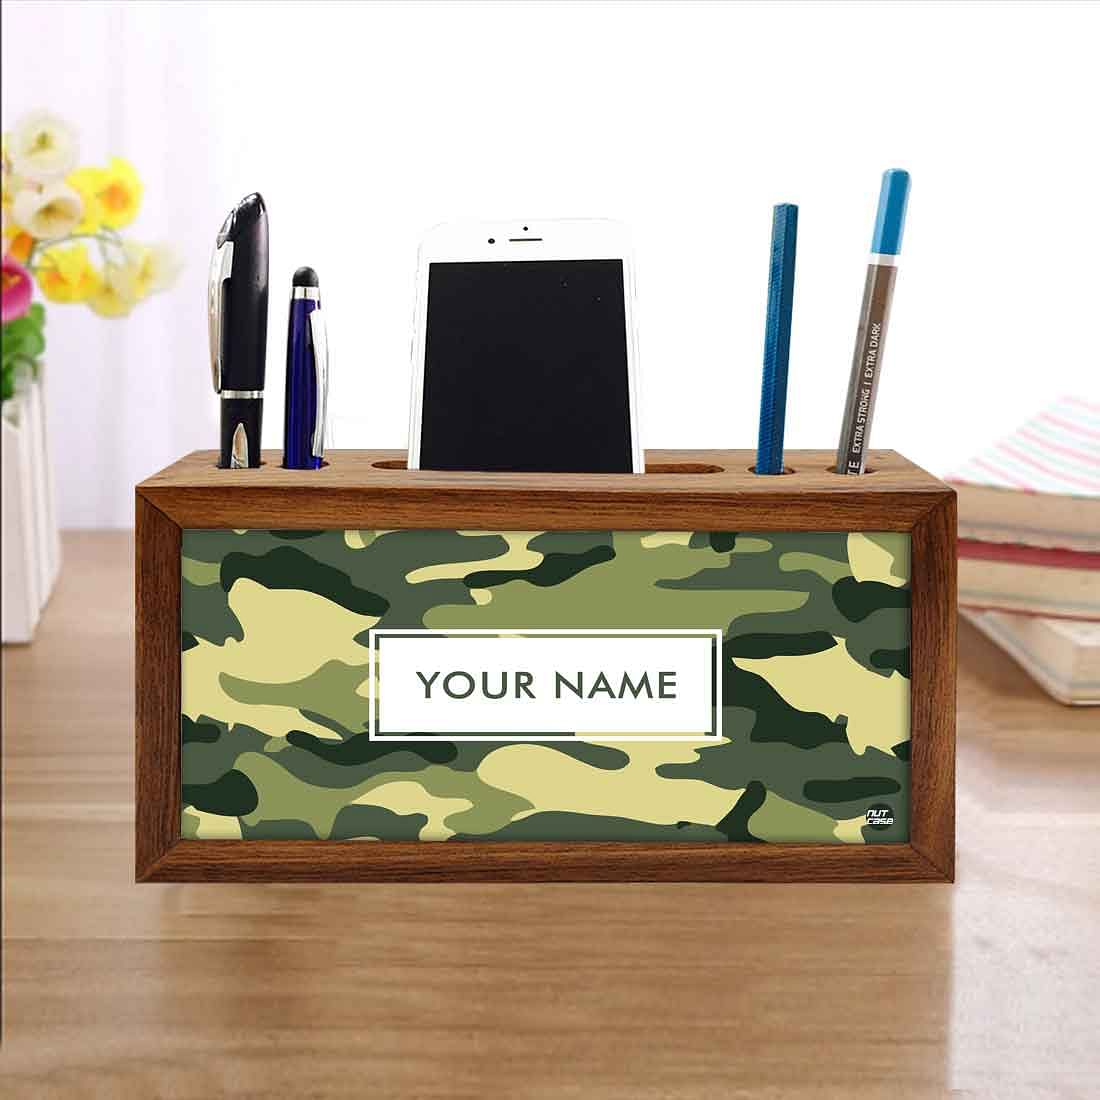 Custom-Made Wooden desktop storage drawers - Army Camo Nutcase